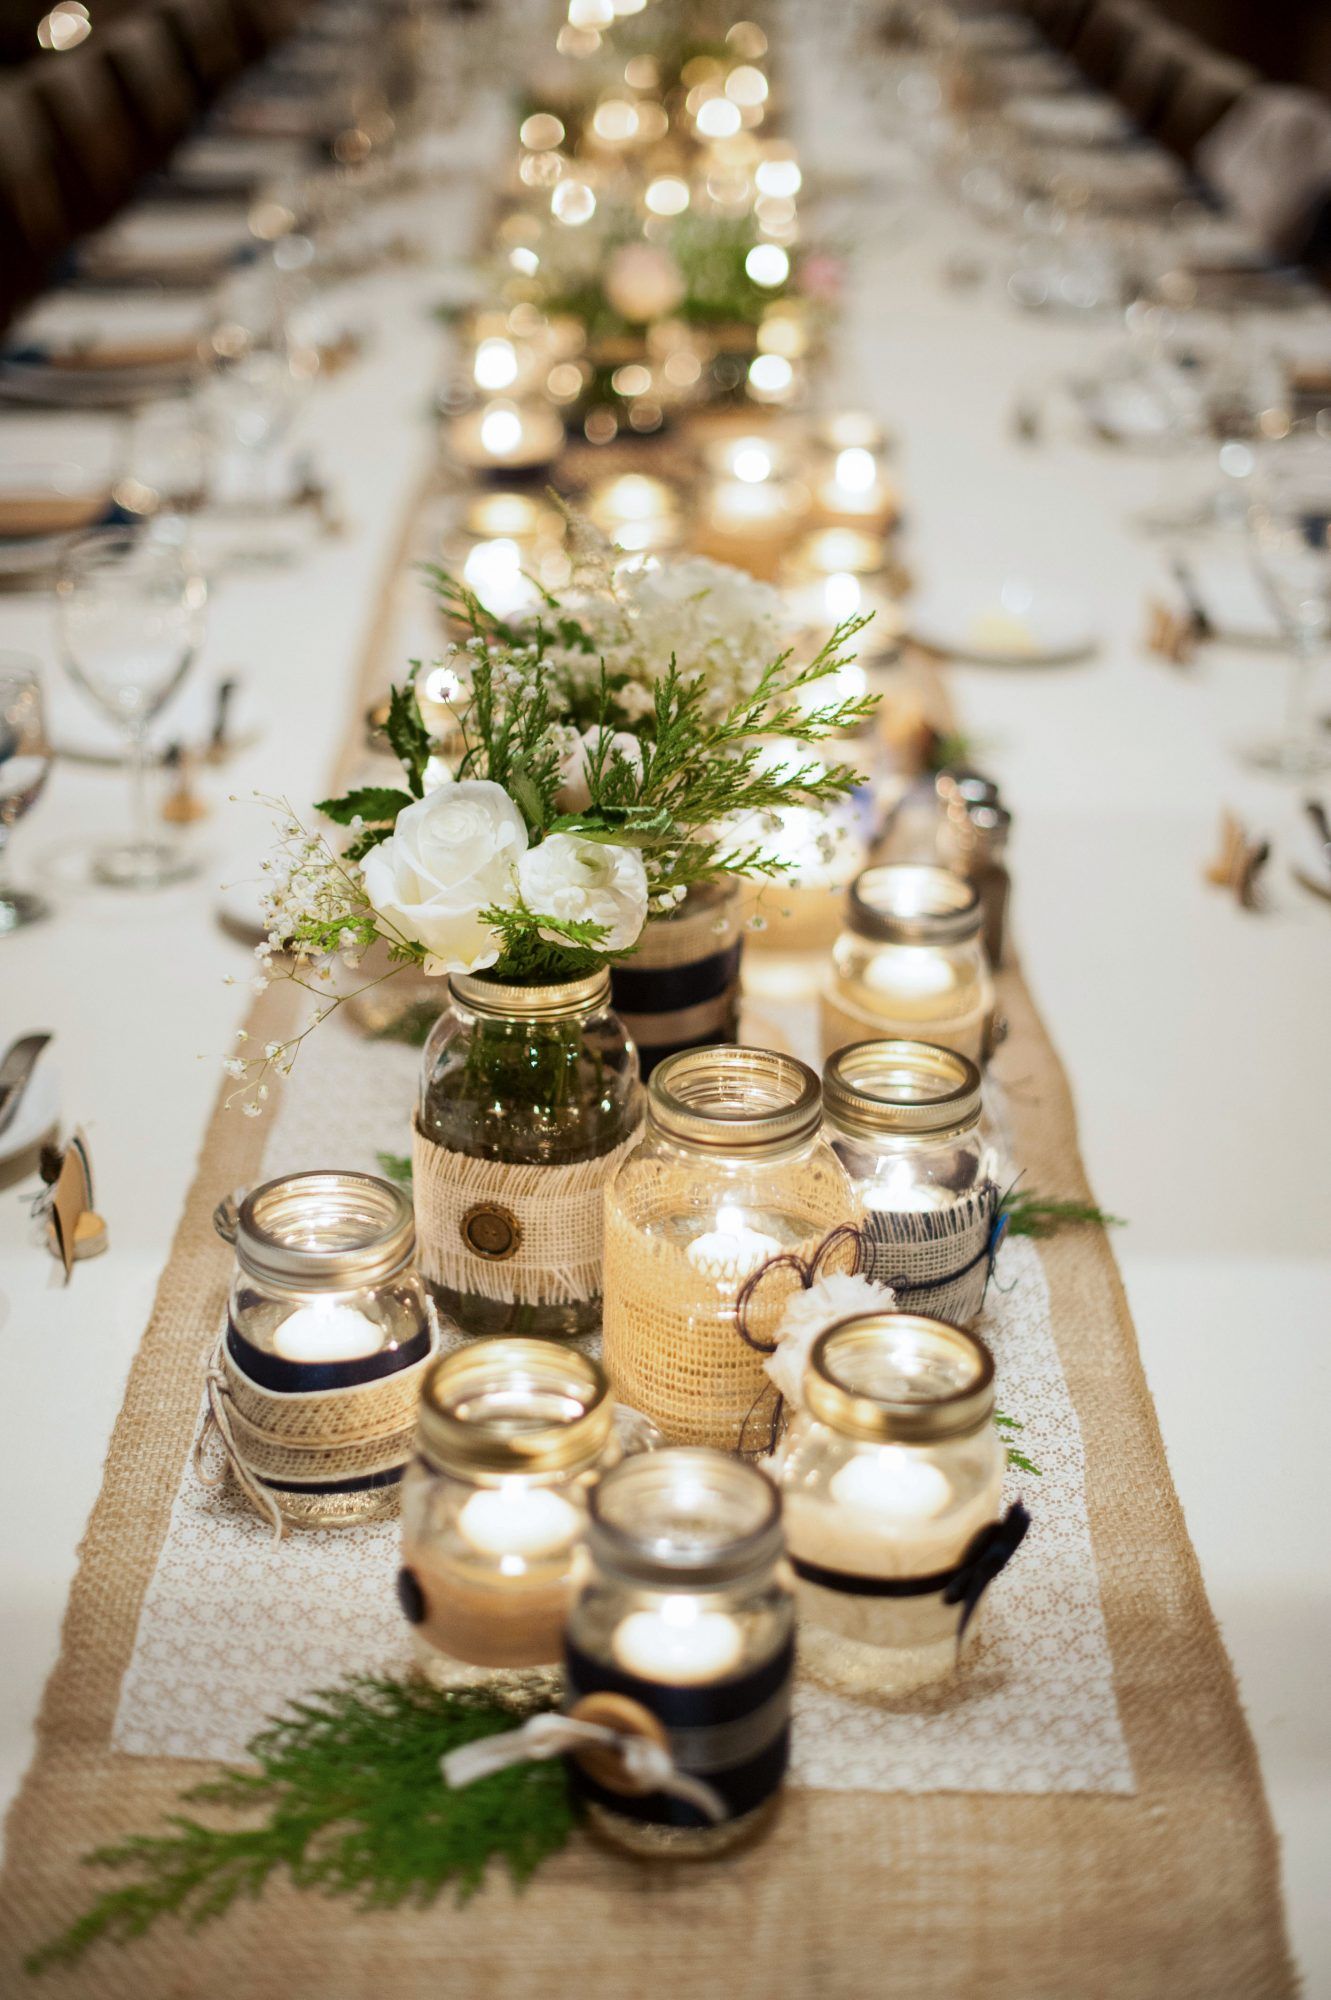 Candles and Mason Jar Wedding Centerpiece